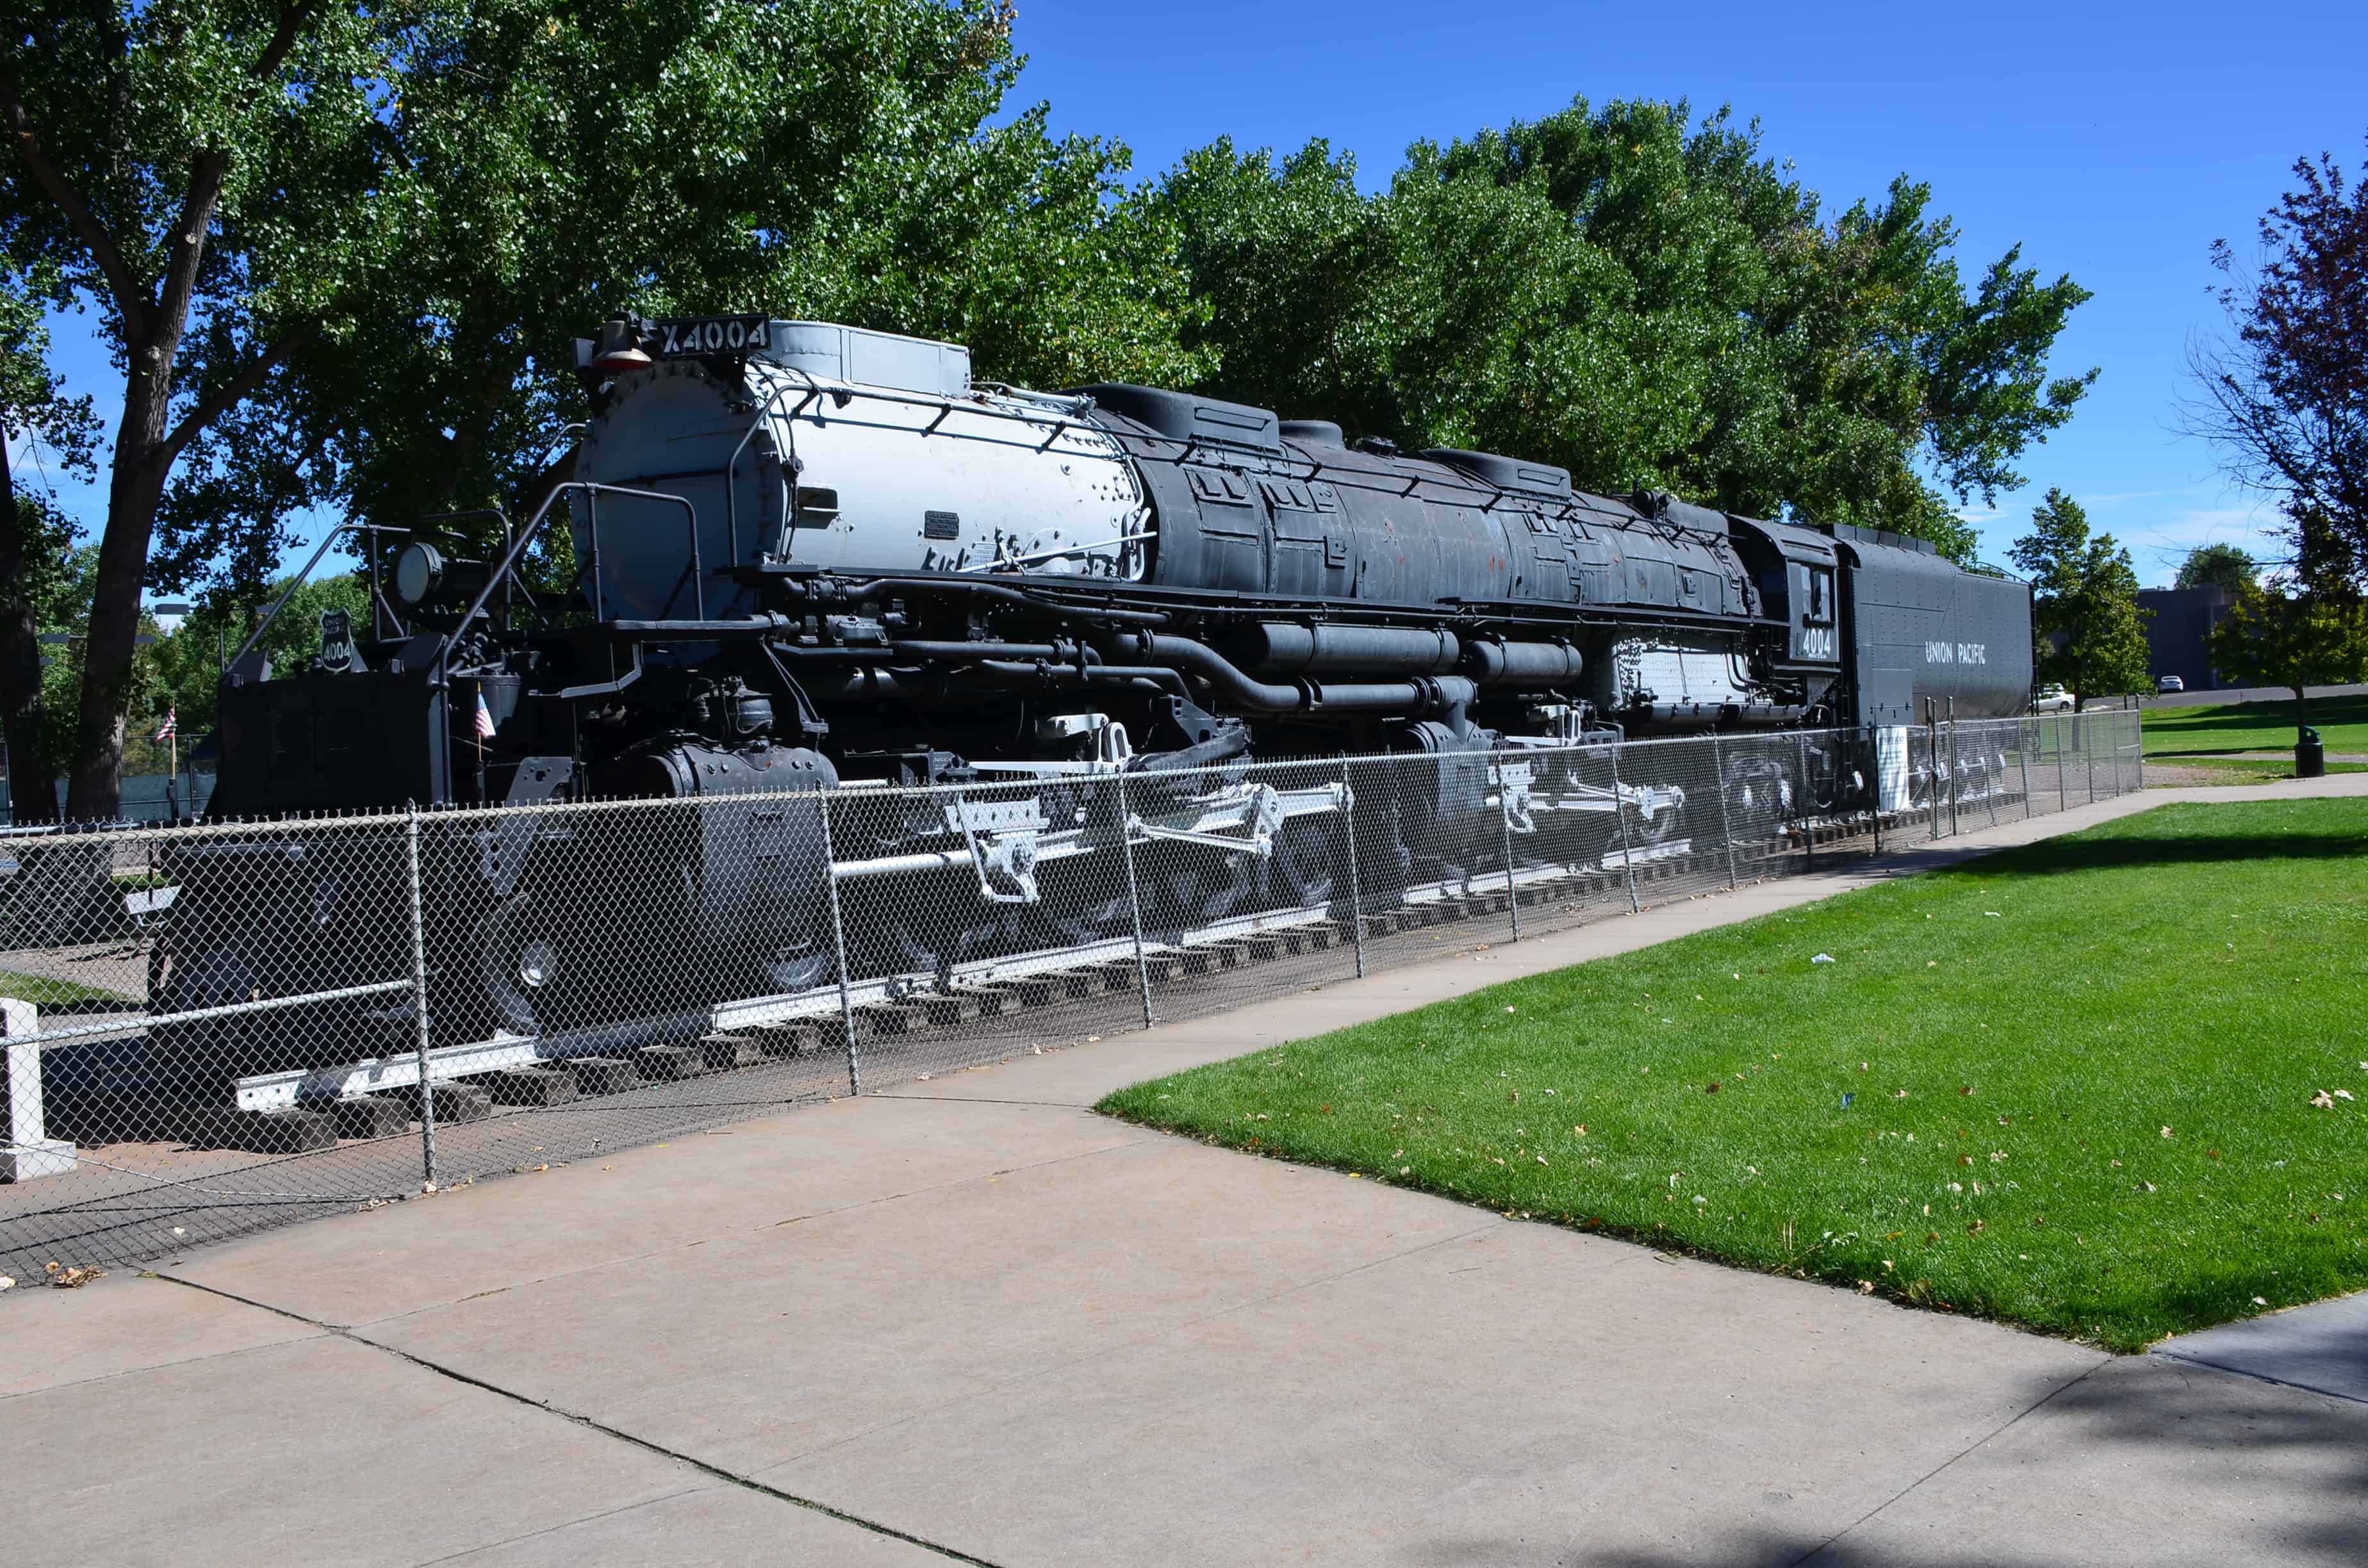 Big Boy steam engine No. 4004 at Holliday Park in Cheyenne, Wyoming